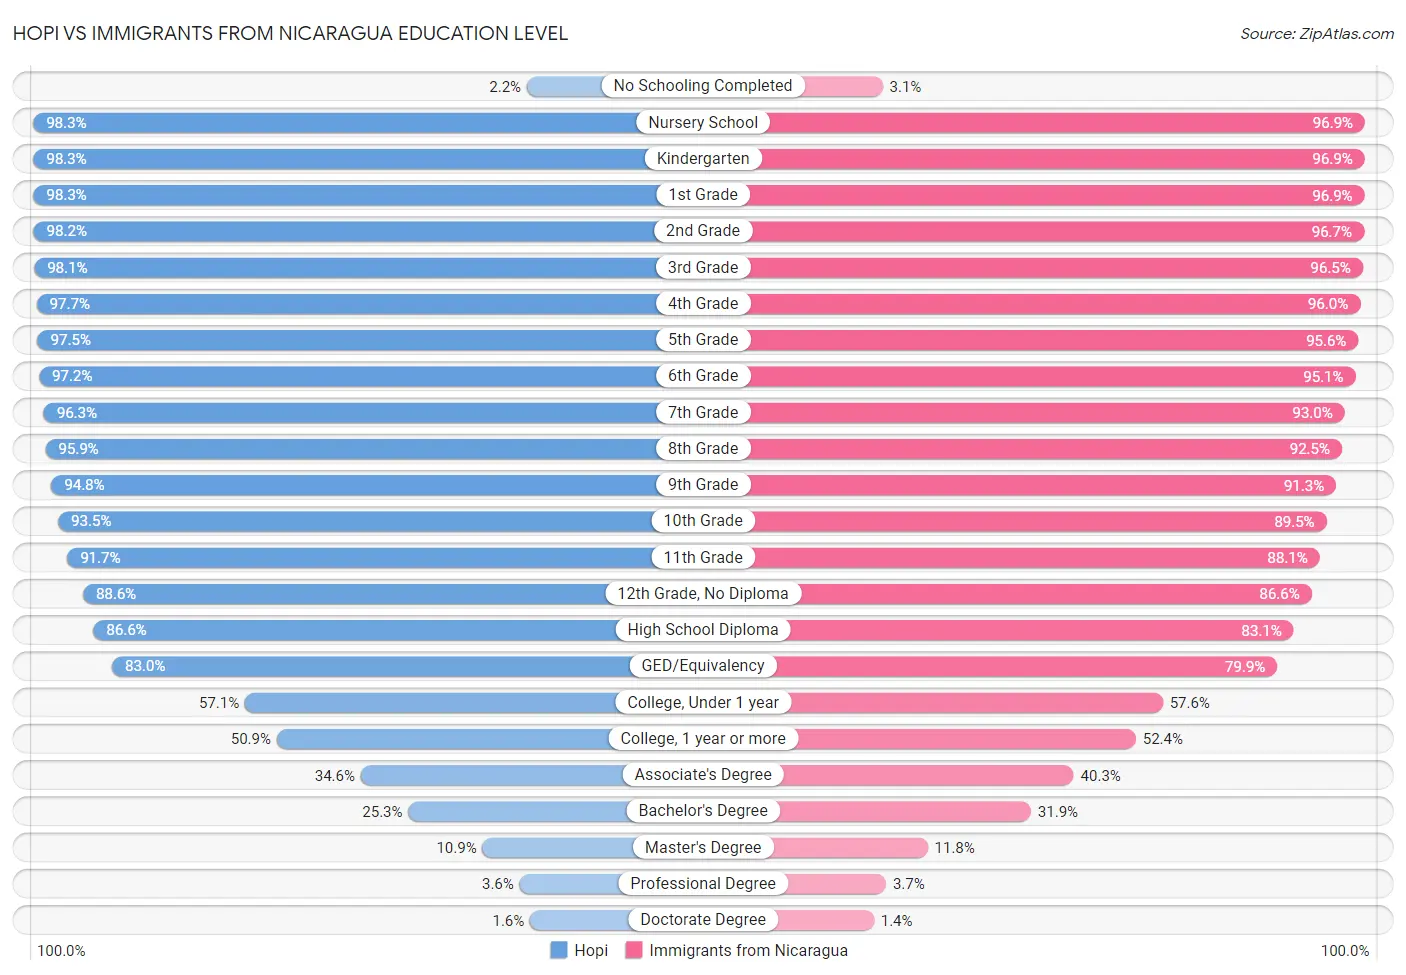 Hopi vs Immigrants from Nicaragua Education Level